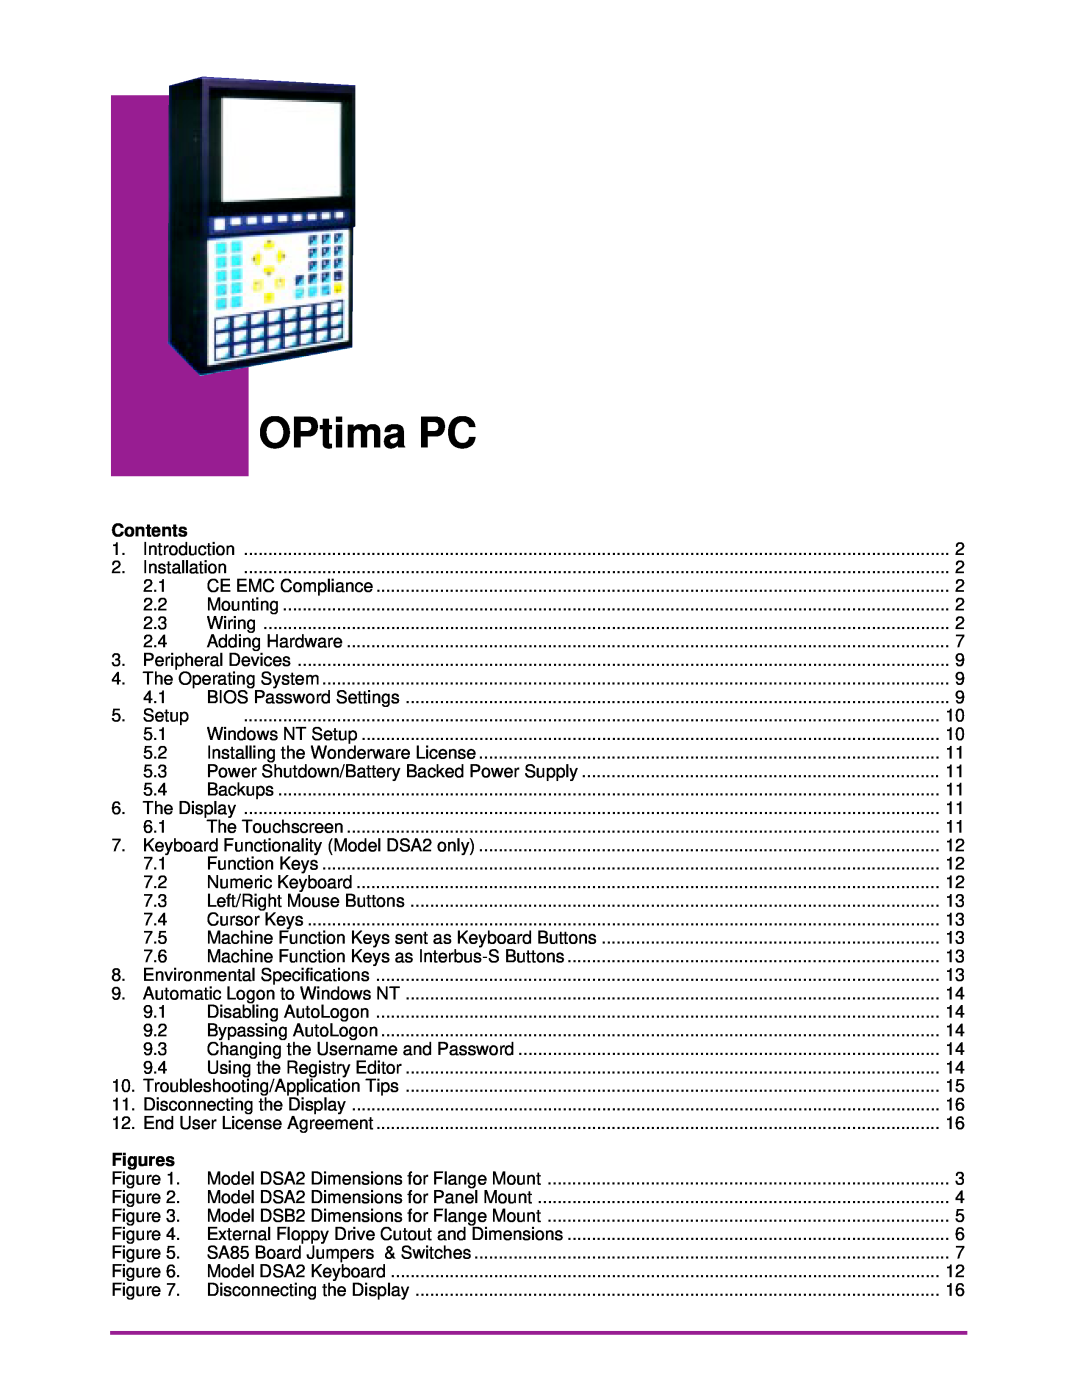 Optima Company specifications Contents, Figures, OPtima PC 